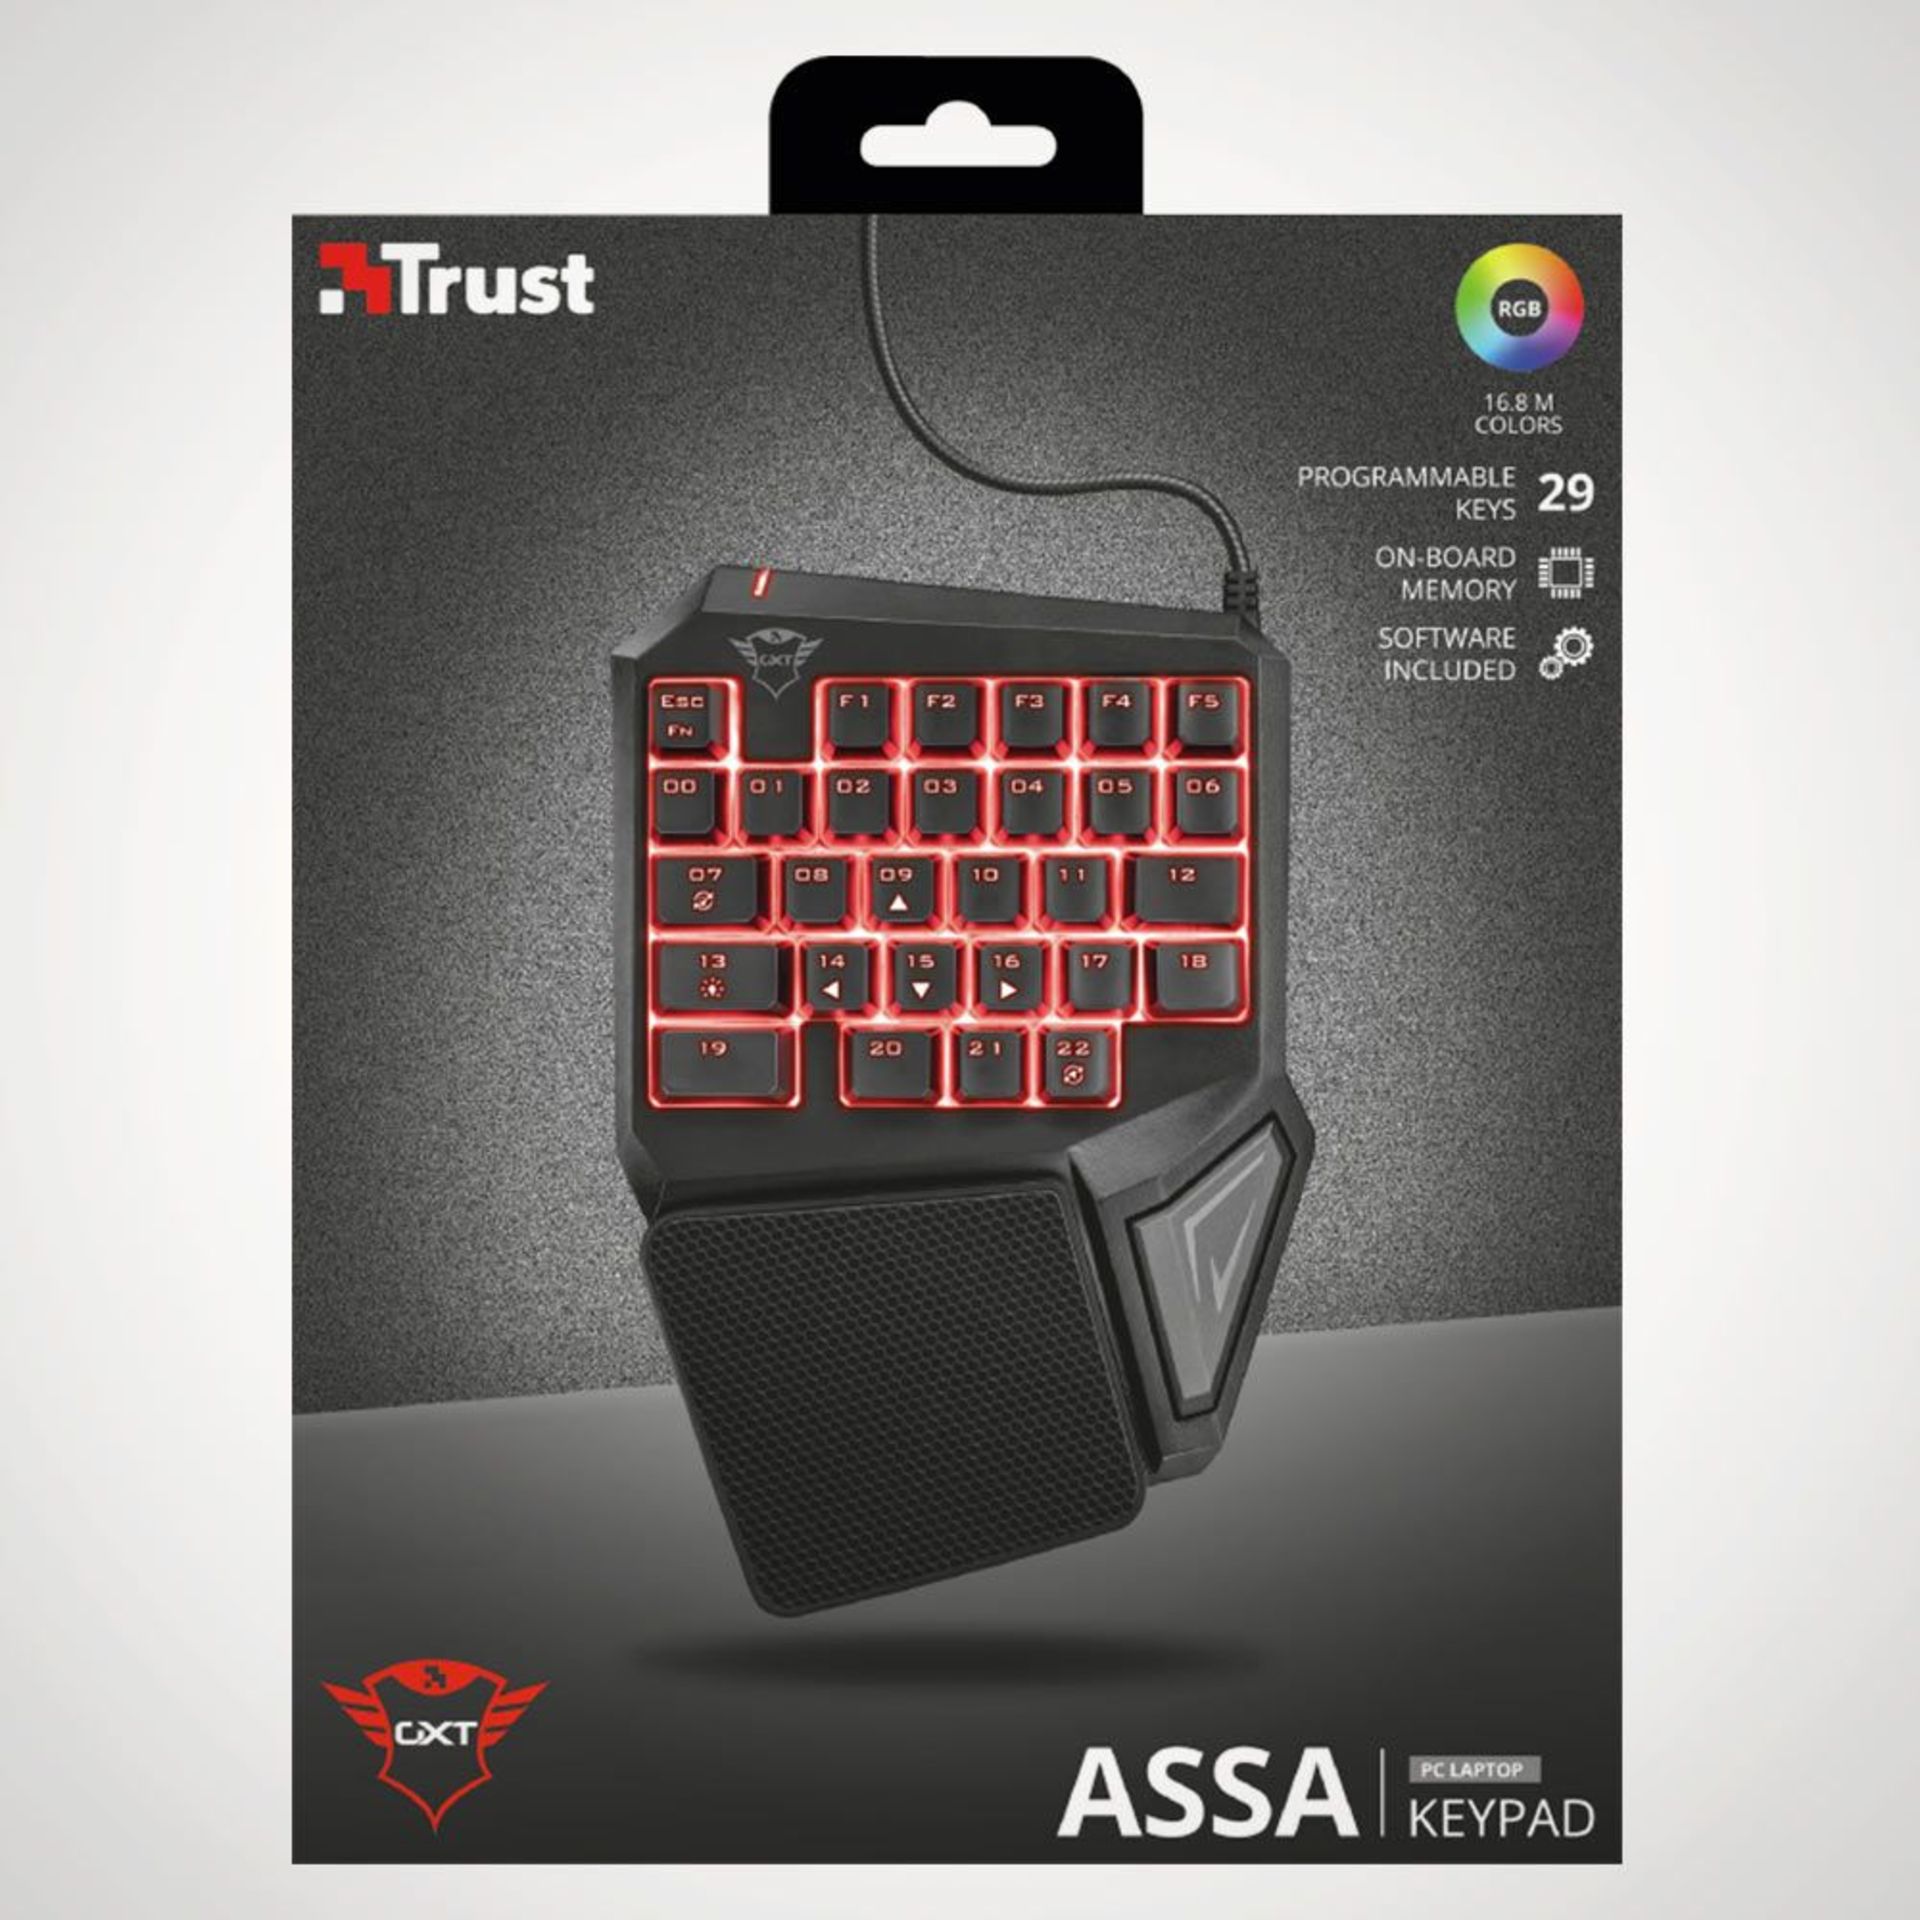 (P2) 2x Trust GXT Assa PC Laptop Keyboard With 29 Programmable Keys RRP £40 Each. (Units Have Retur